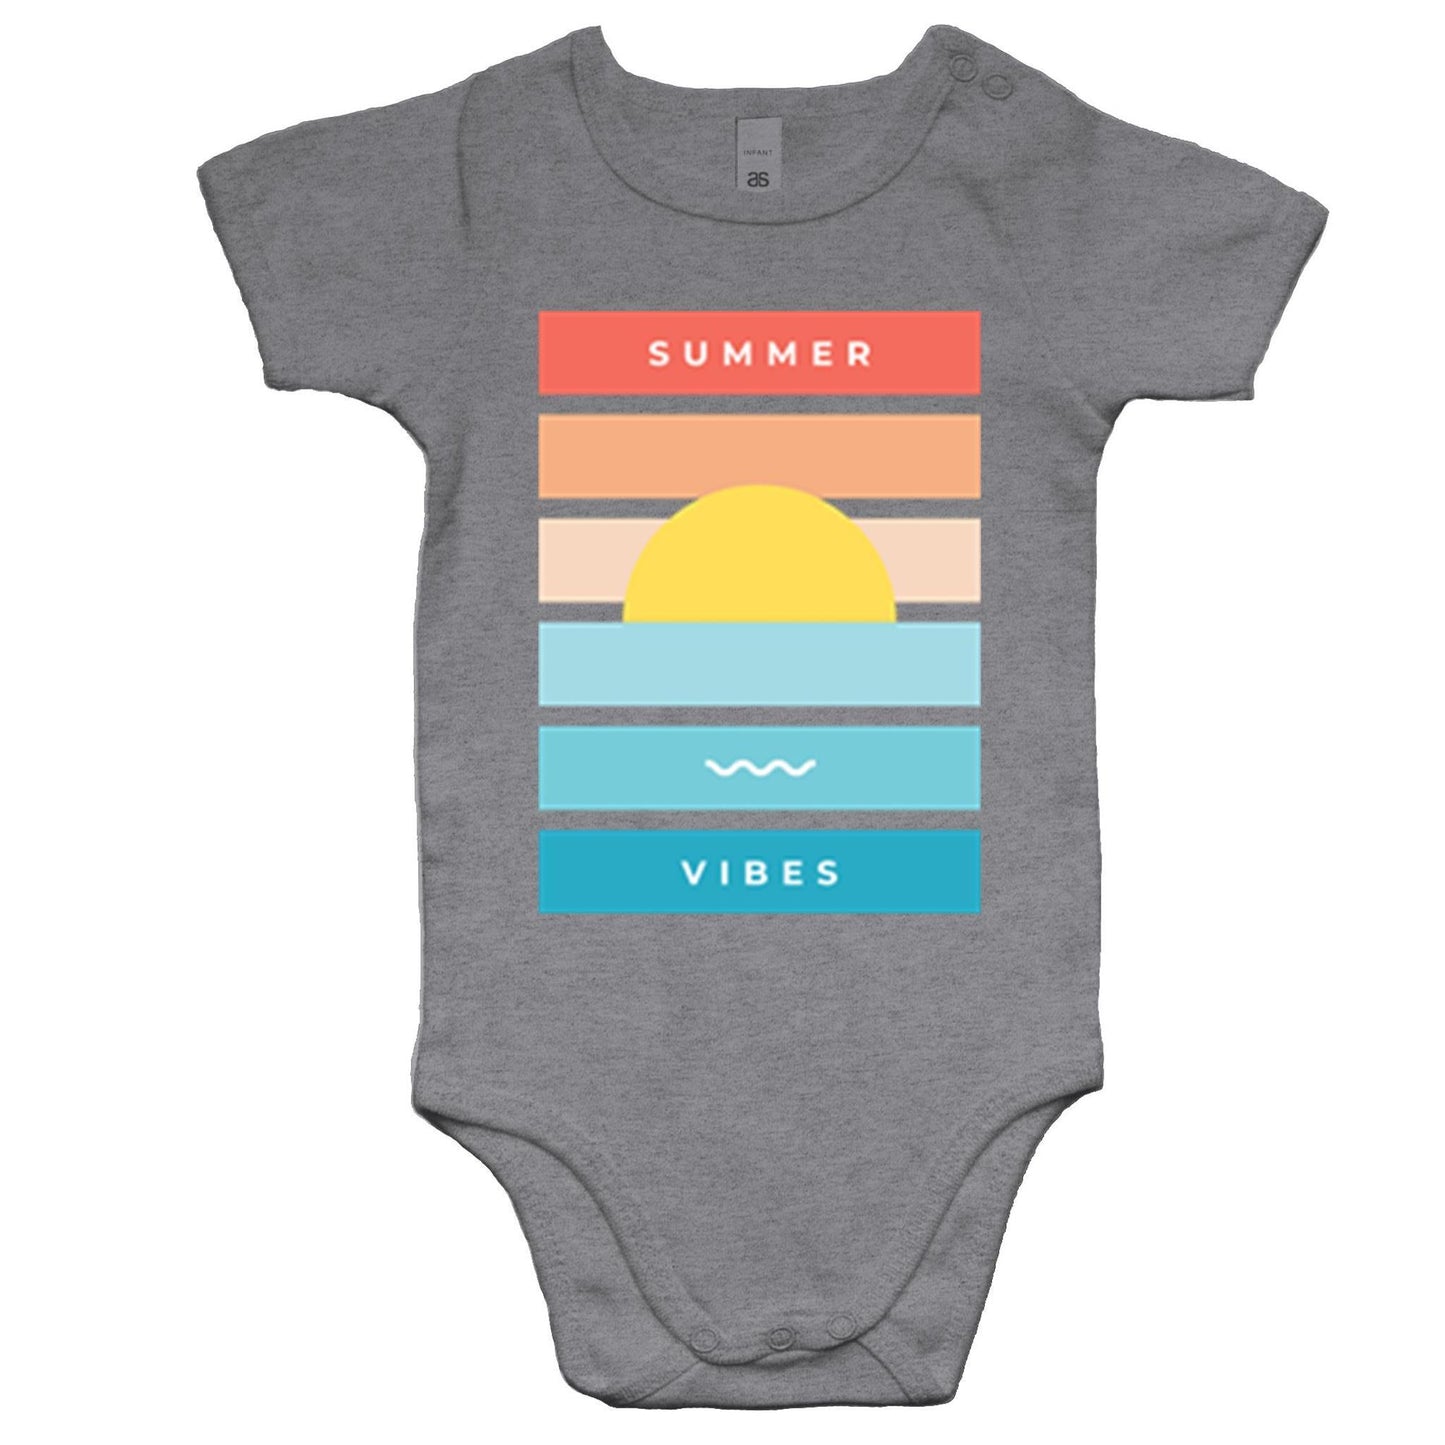 Summer Vibes - Baby Bodysuit Grey Marle Baby Bodysuit kids Summer